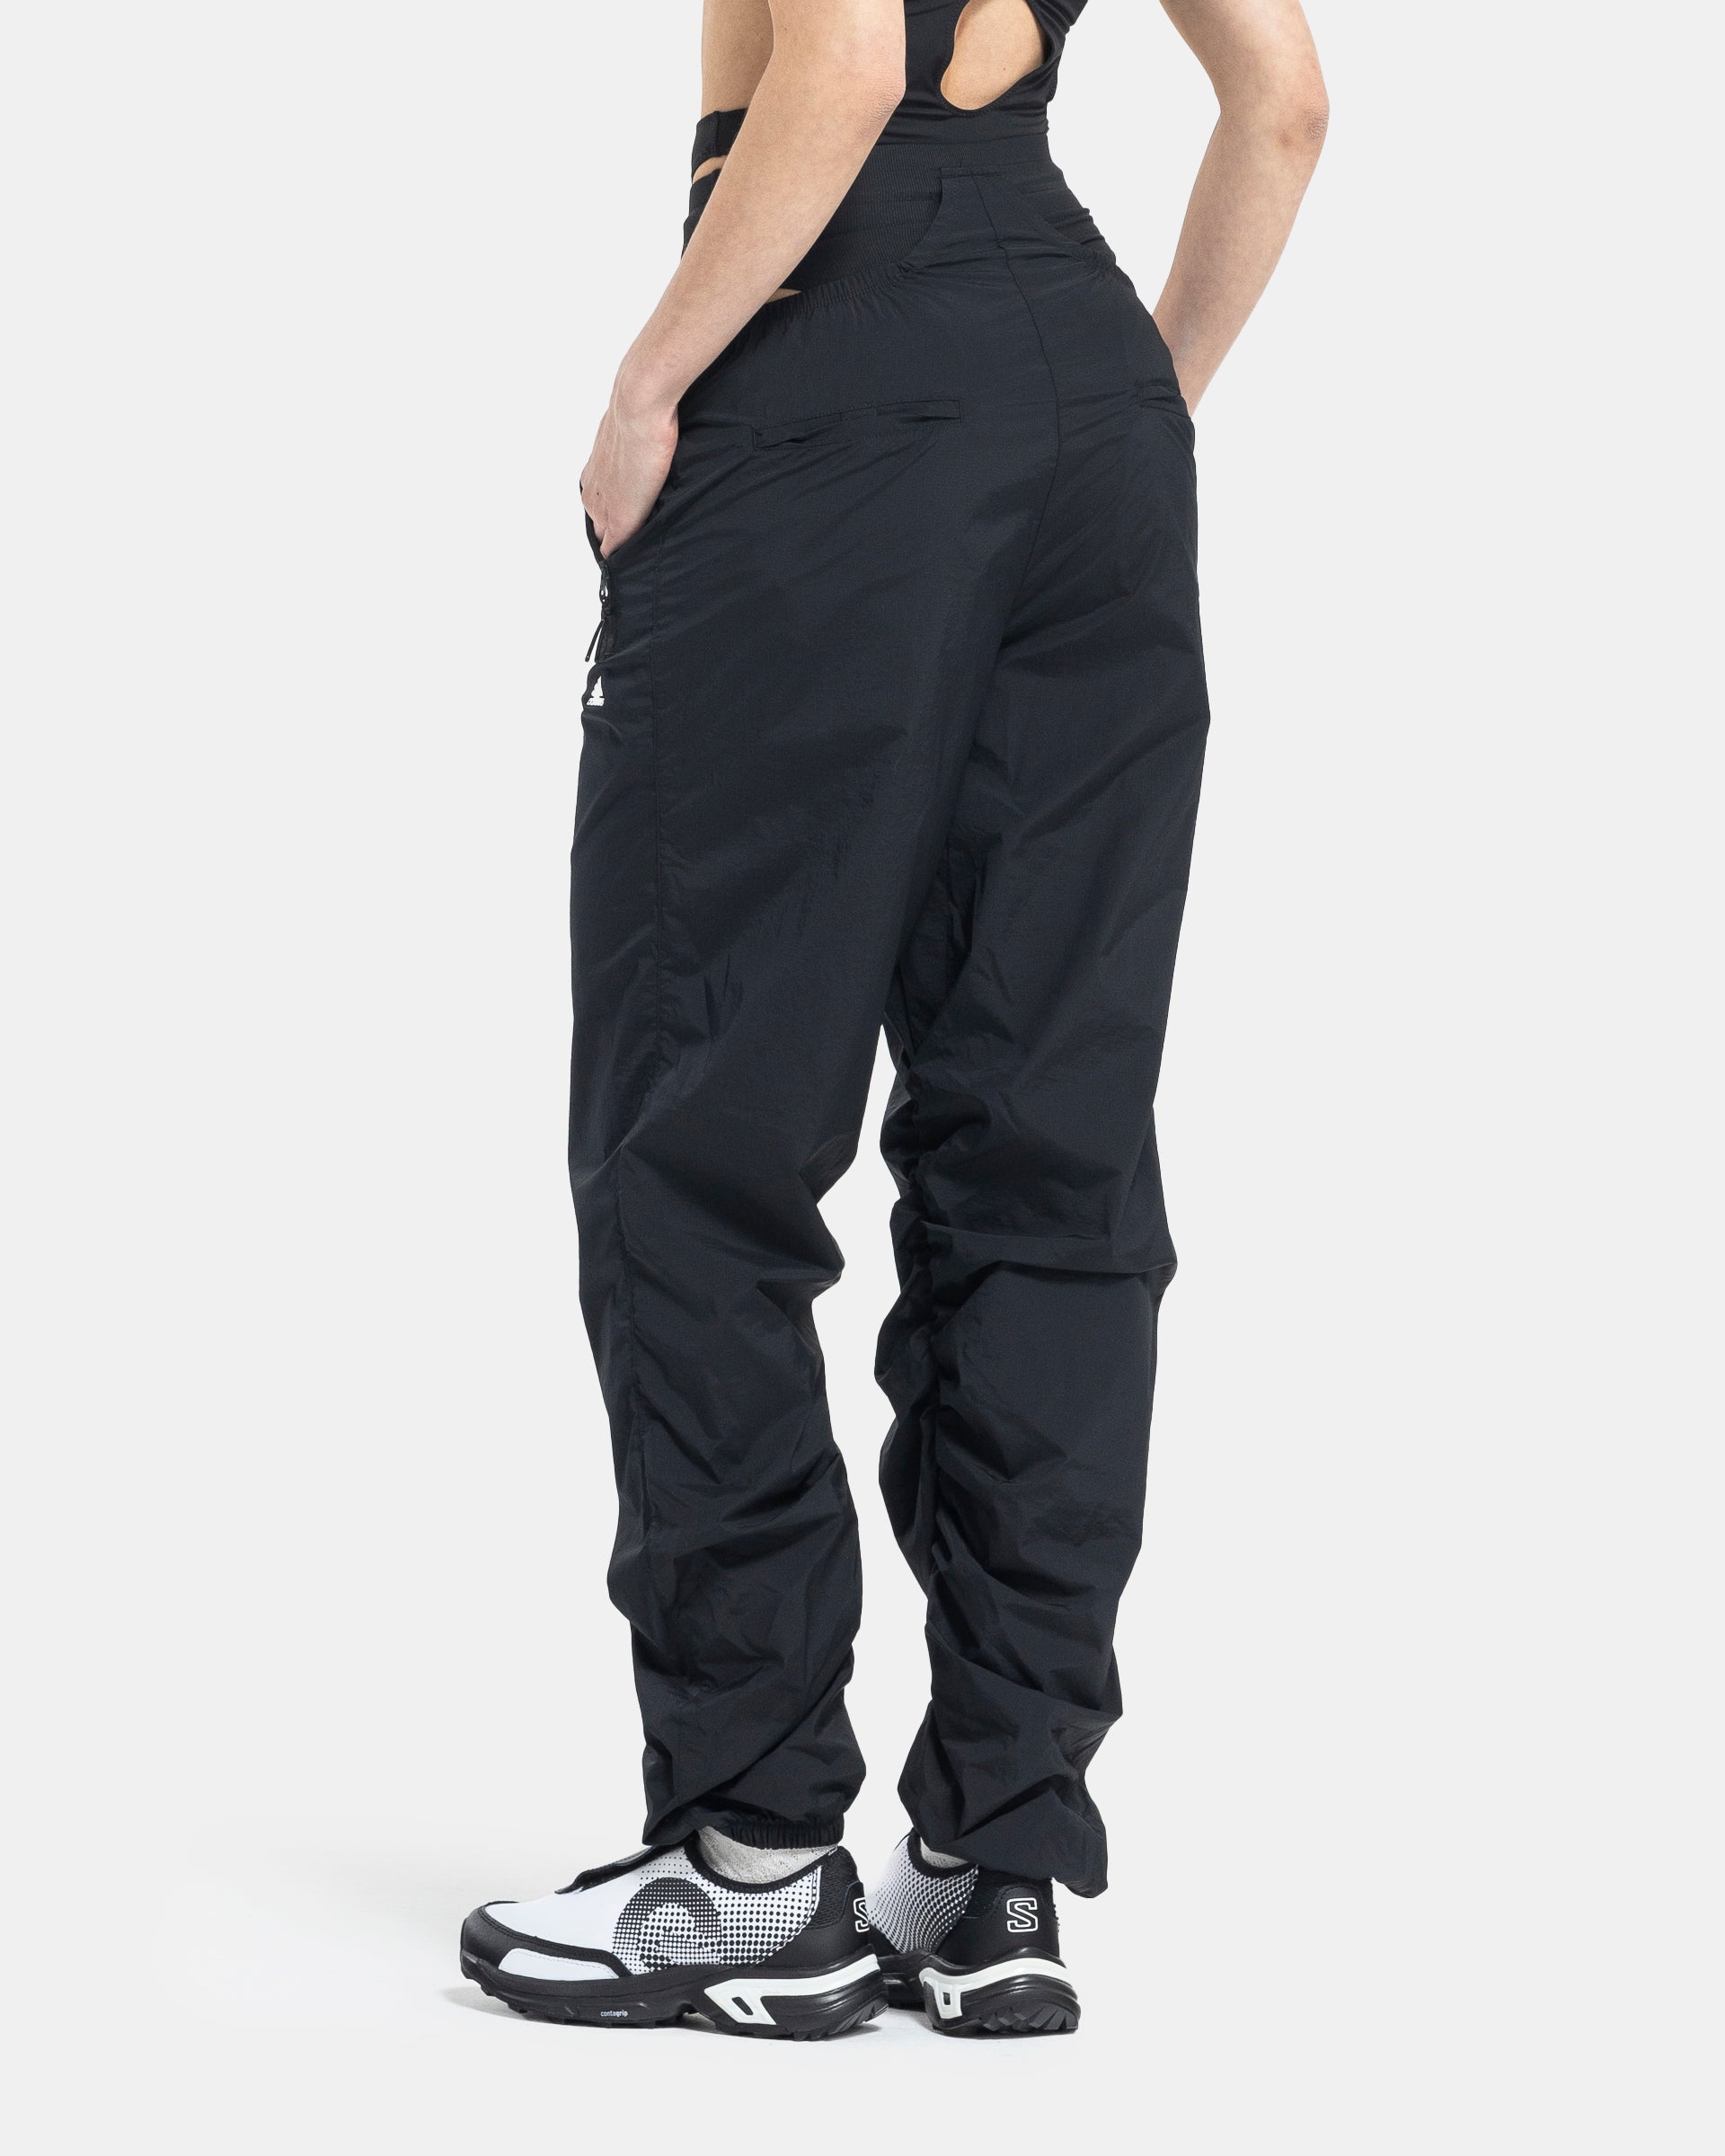 Female model wearing RUI x Adidas Black Track Pants on white background